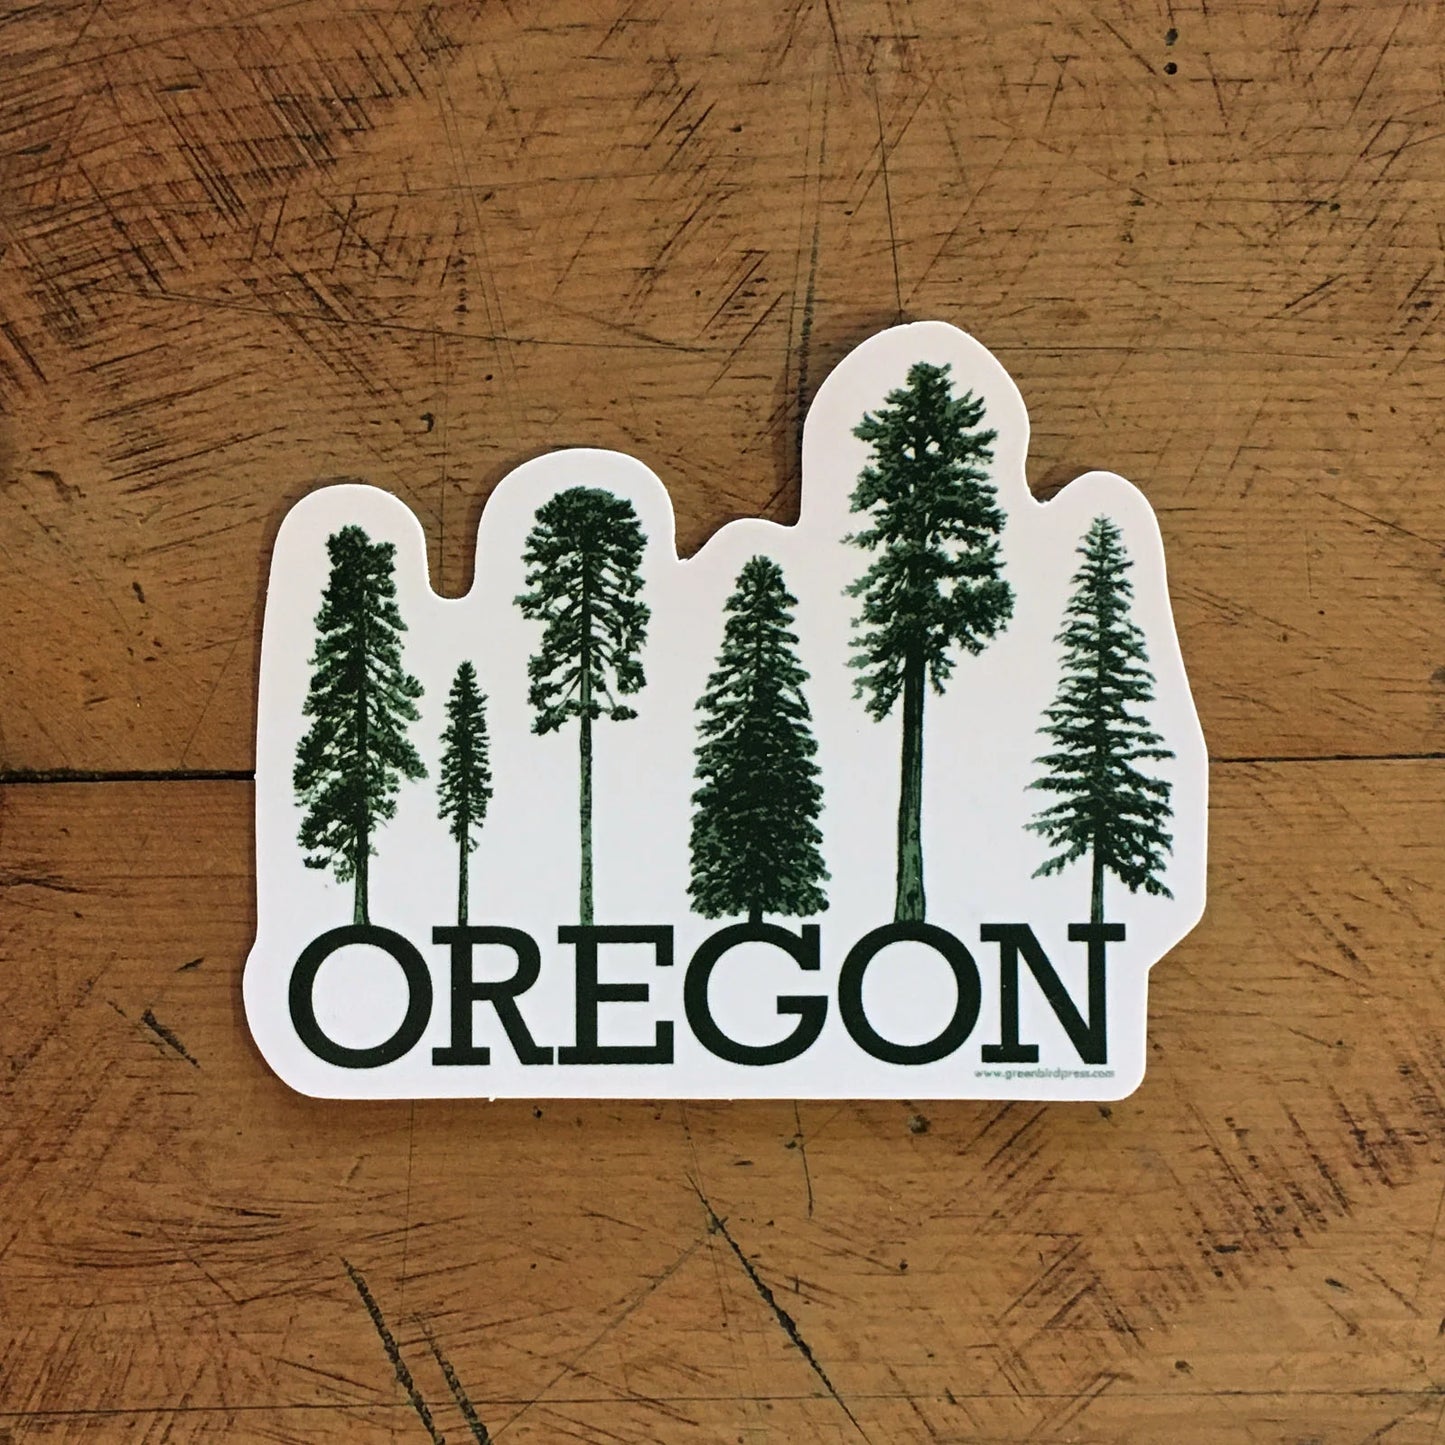 Oregon Conifer Tree Stickers by Green Bird Press